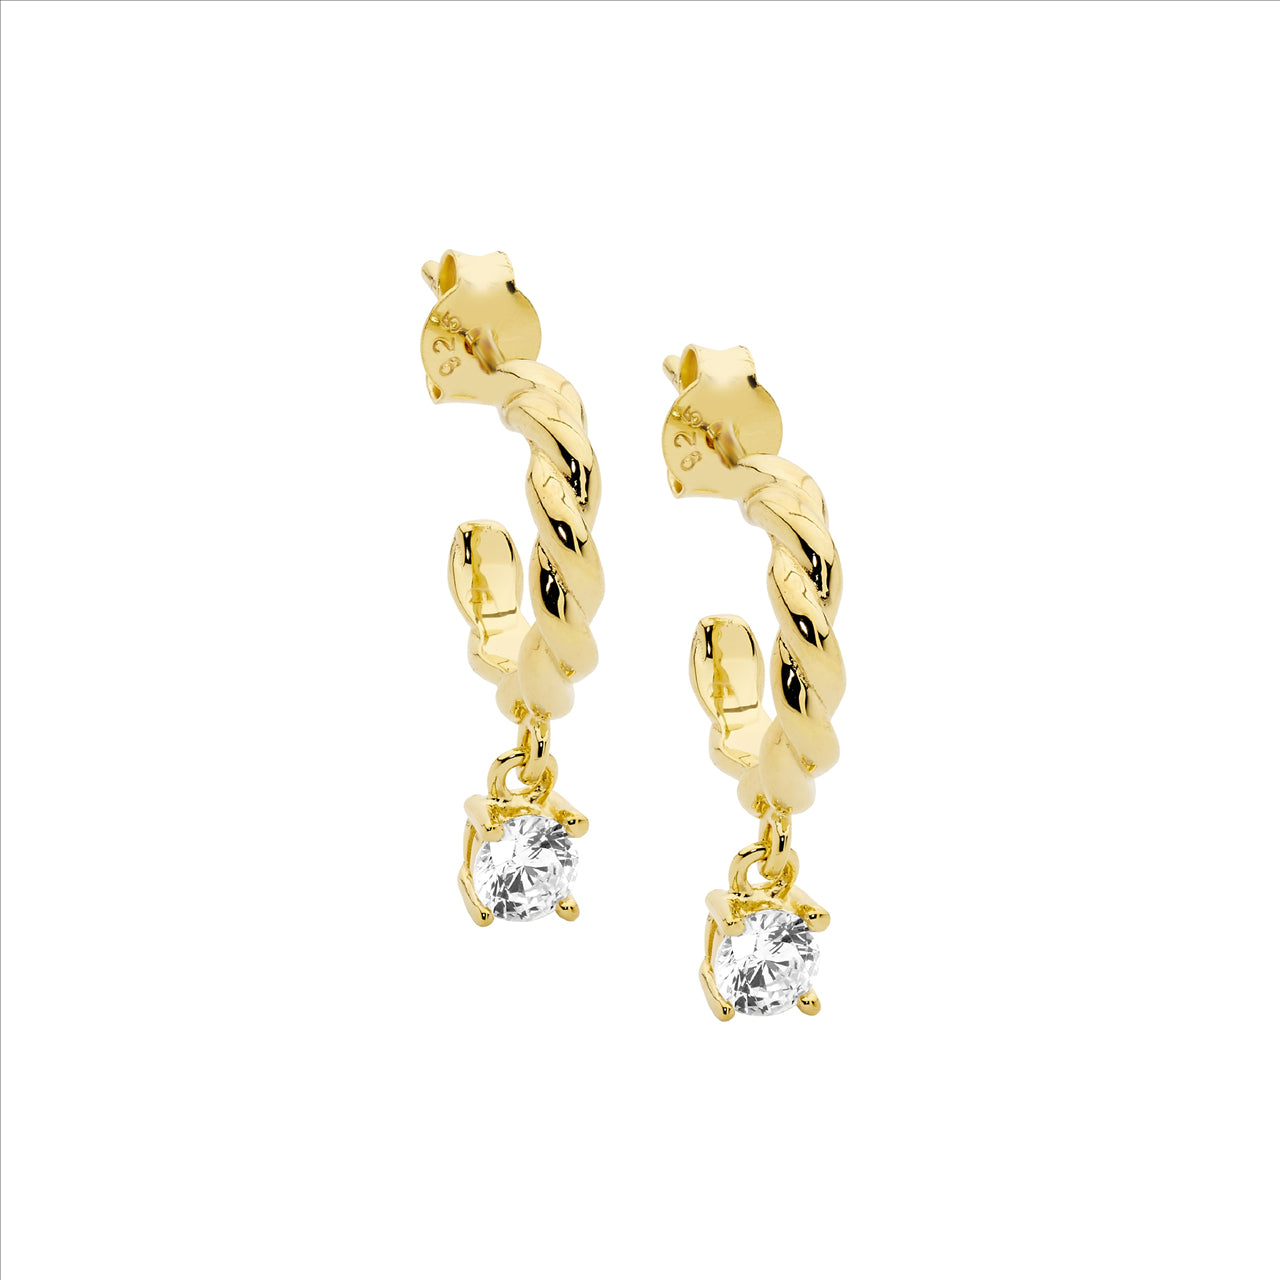 Twist Hoop Earrings with Cubic Zirconia Drop - Yellow Gold Plate